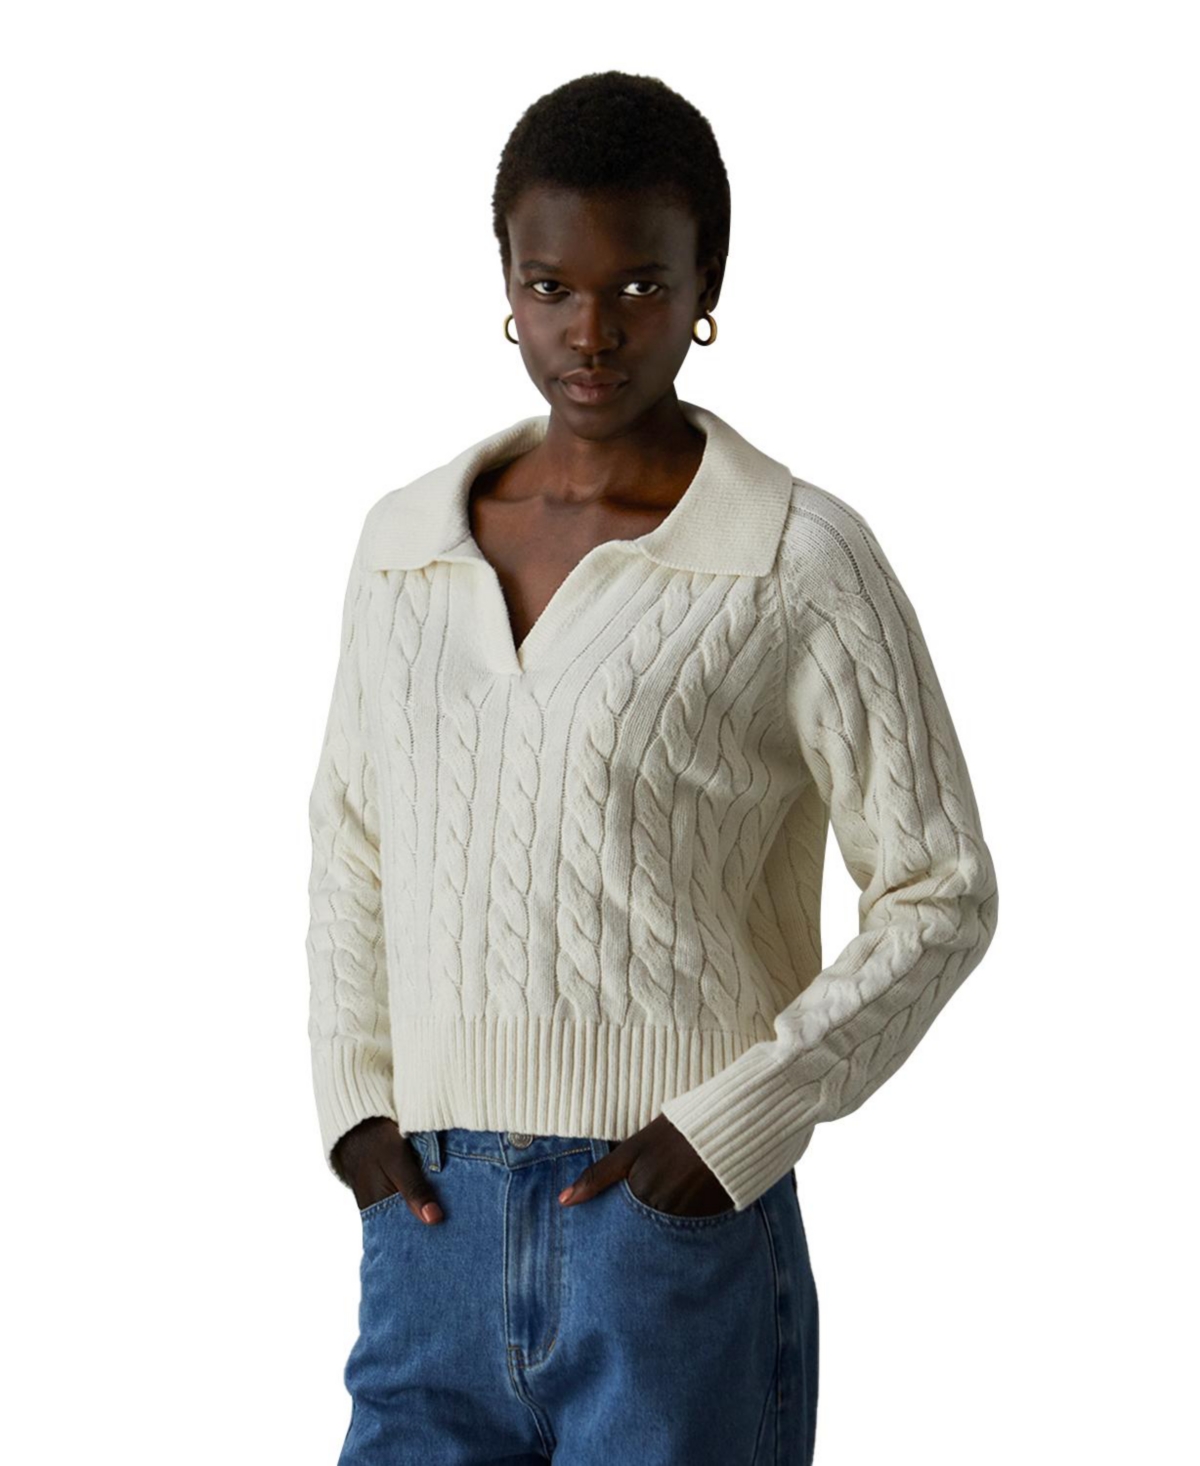 Women's Vivian Pretzel Sweater Knit Top - Open white + cream